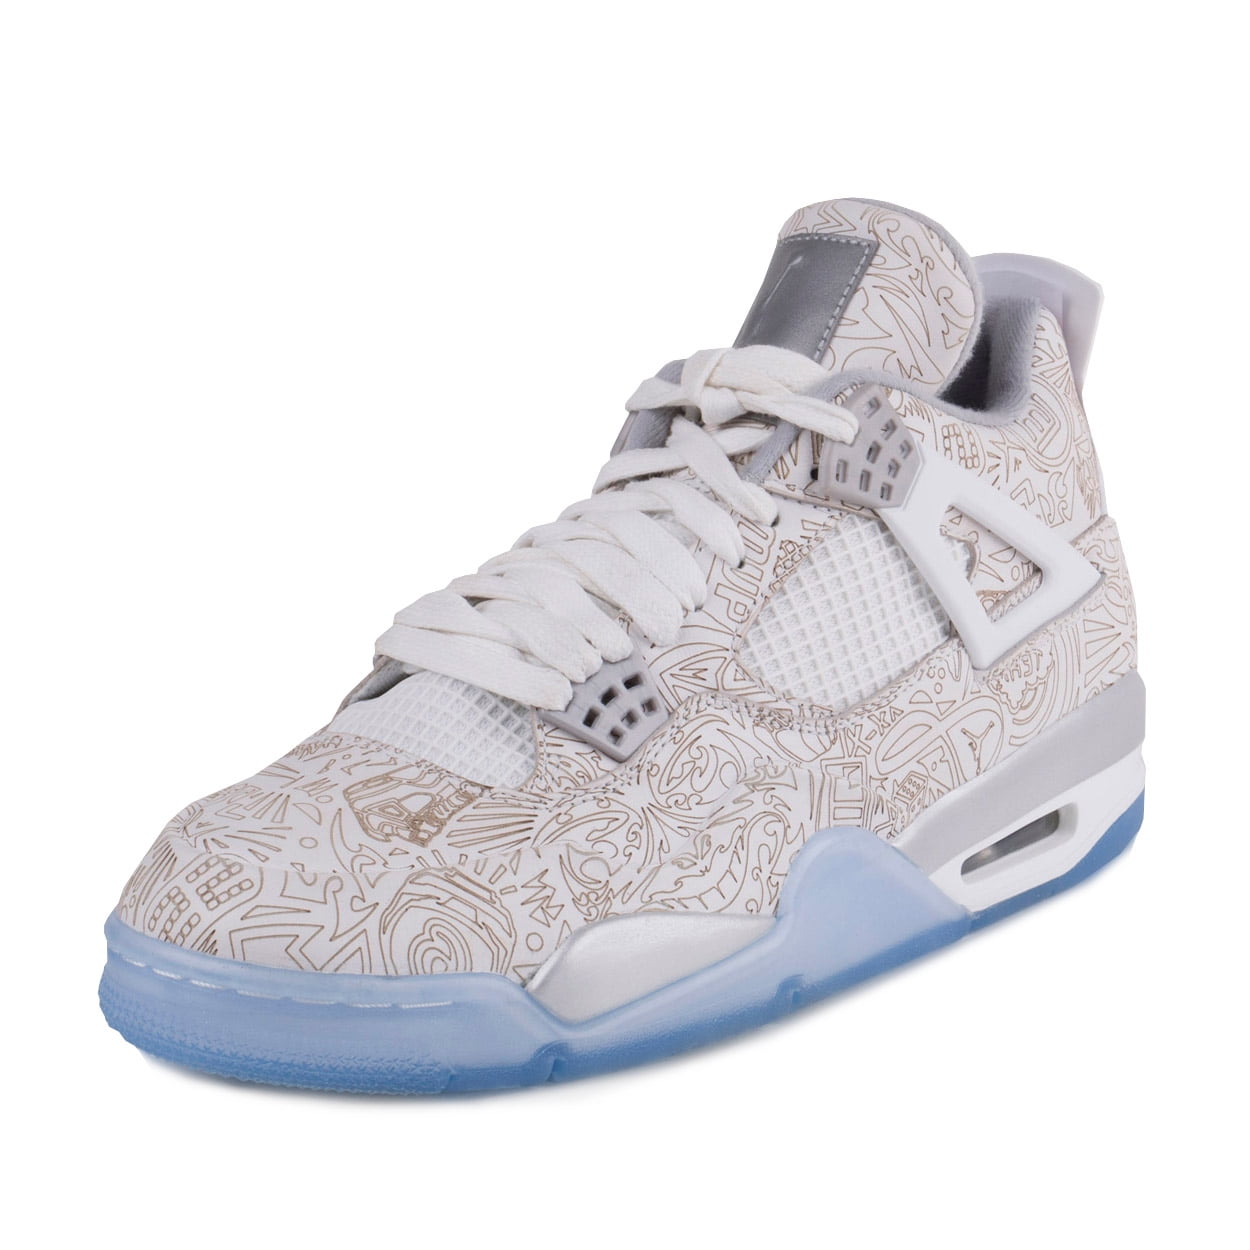 Nike Mens Air Jordan 4 Laser White/Chrome-Metallic Silver 705333-105 - Walmart.com